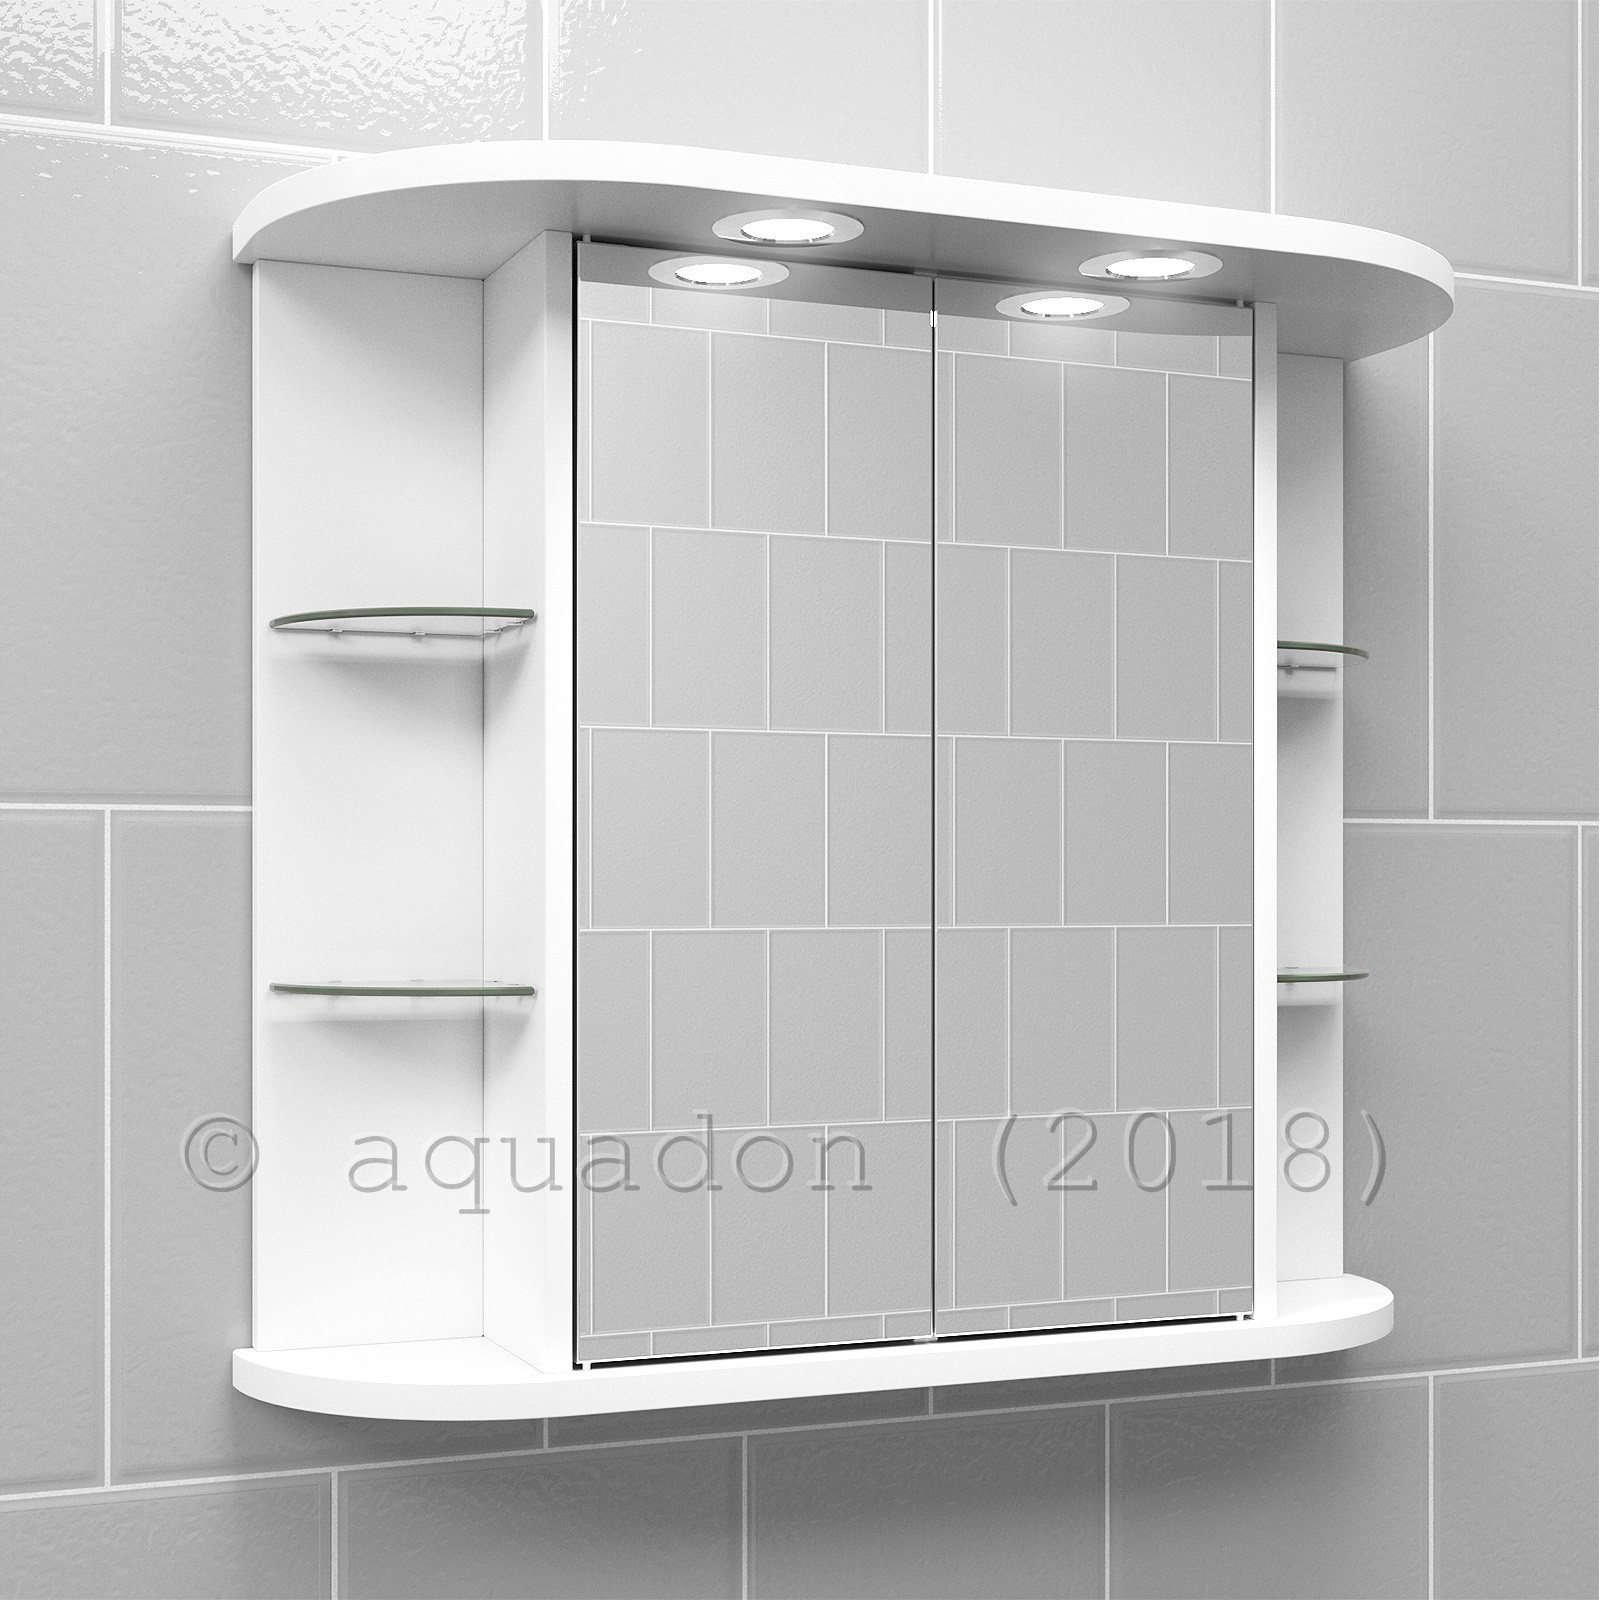 Bathroom Mirror Cabinet With Light
 Bathroom Wall Double Door Mirror Cabinet White Shelves